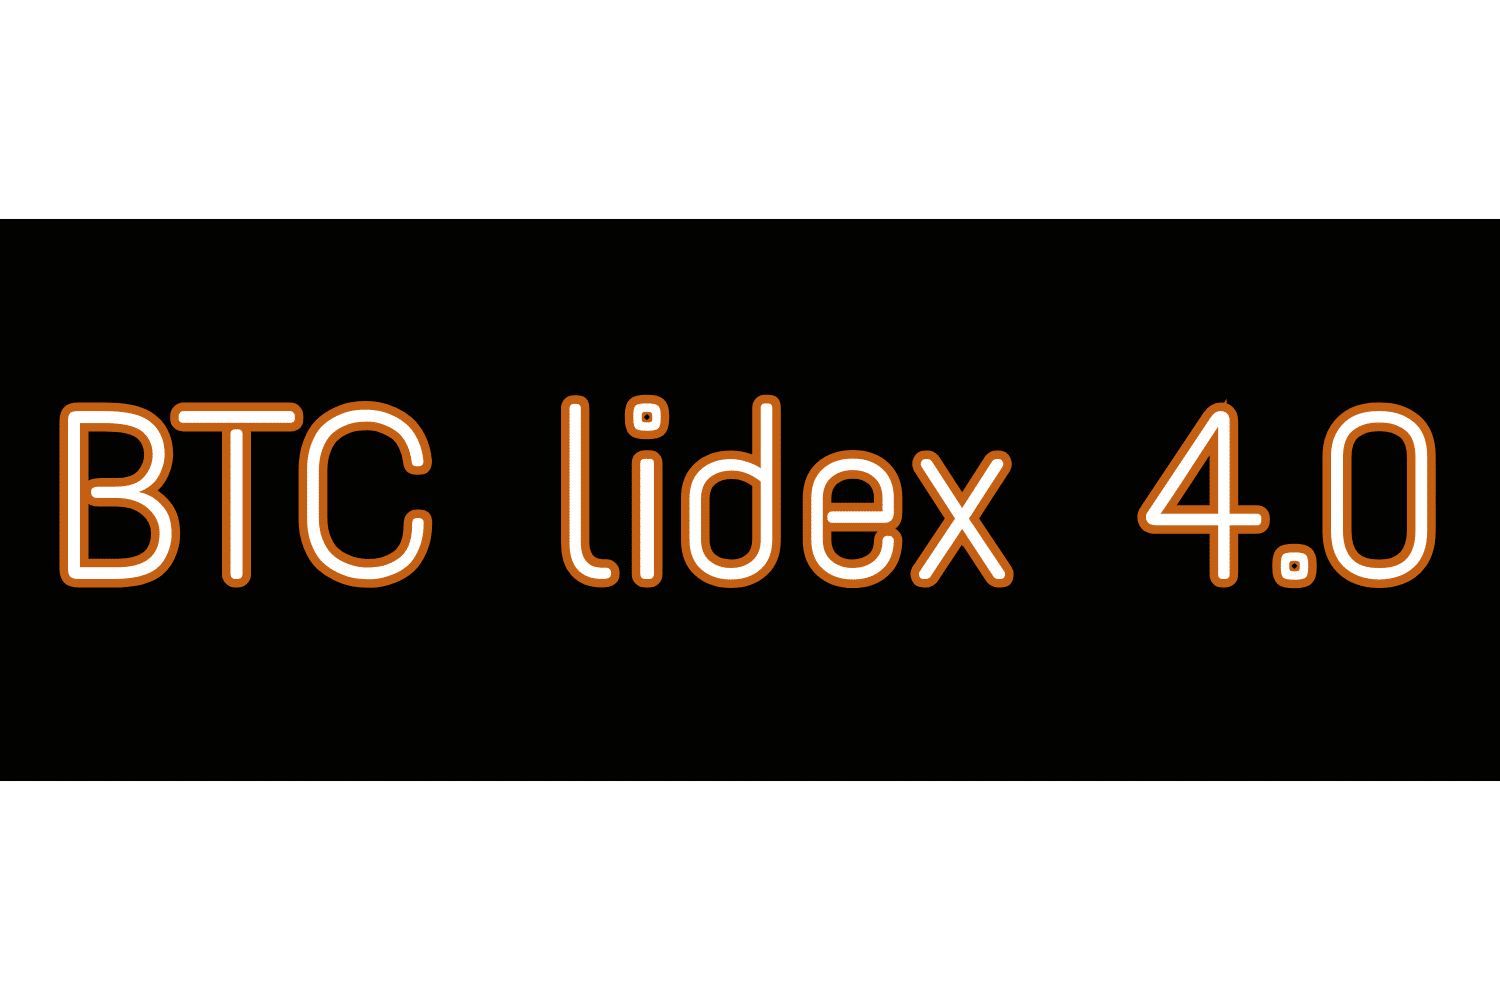 Bit Lidex Soft 4.0 Signup